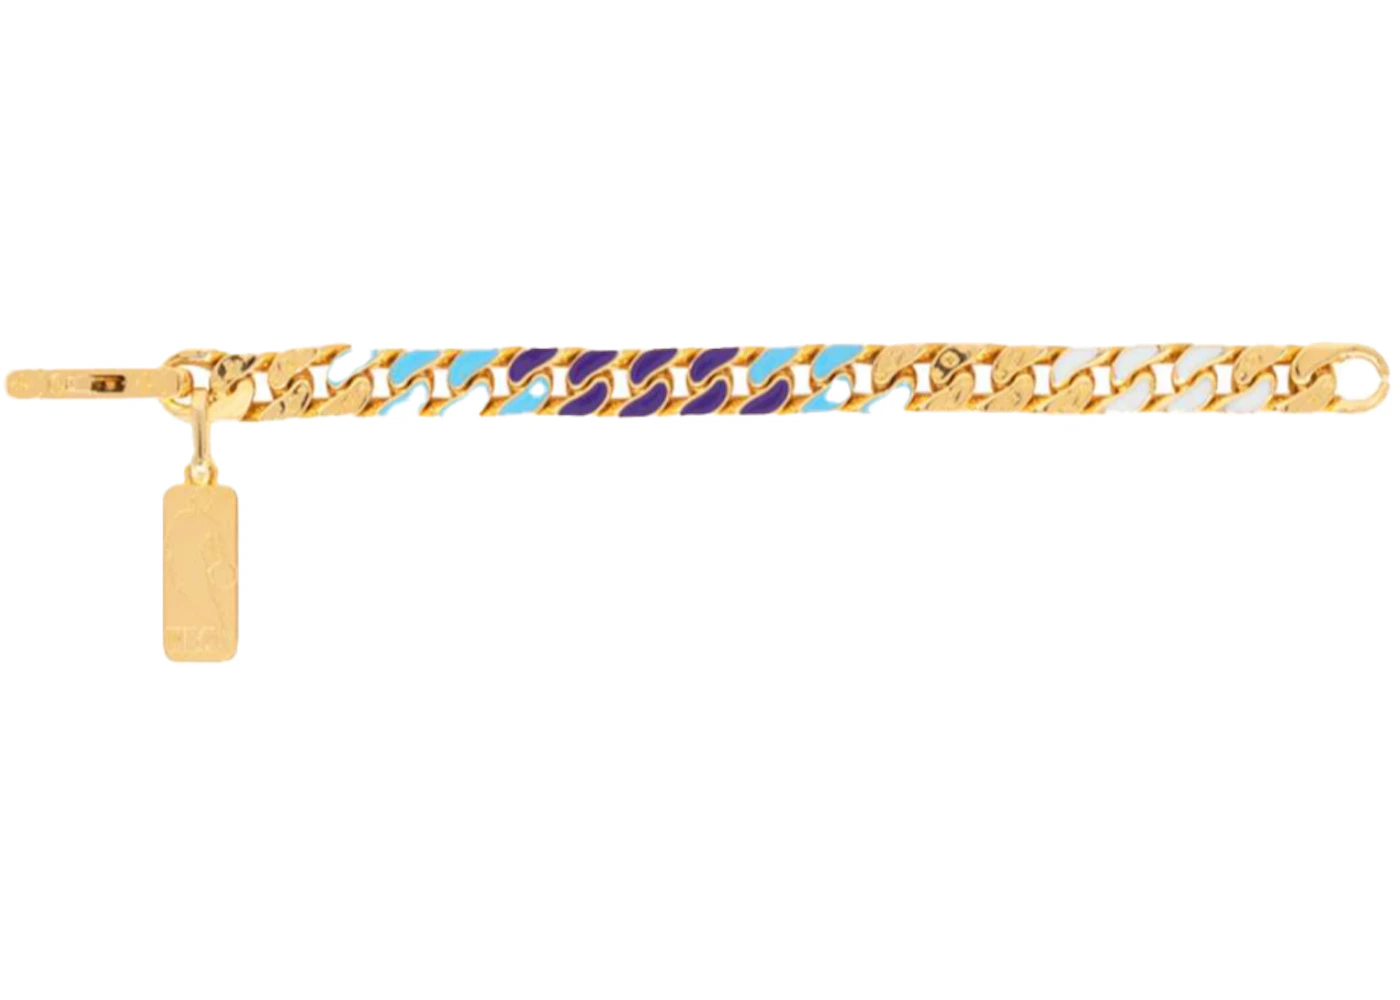 Louis Vuitton NBA Chain Links Bracelet